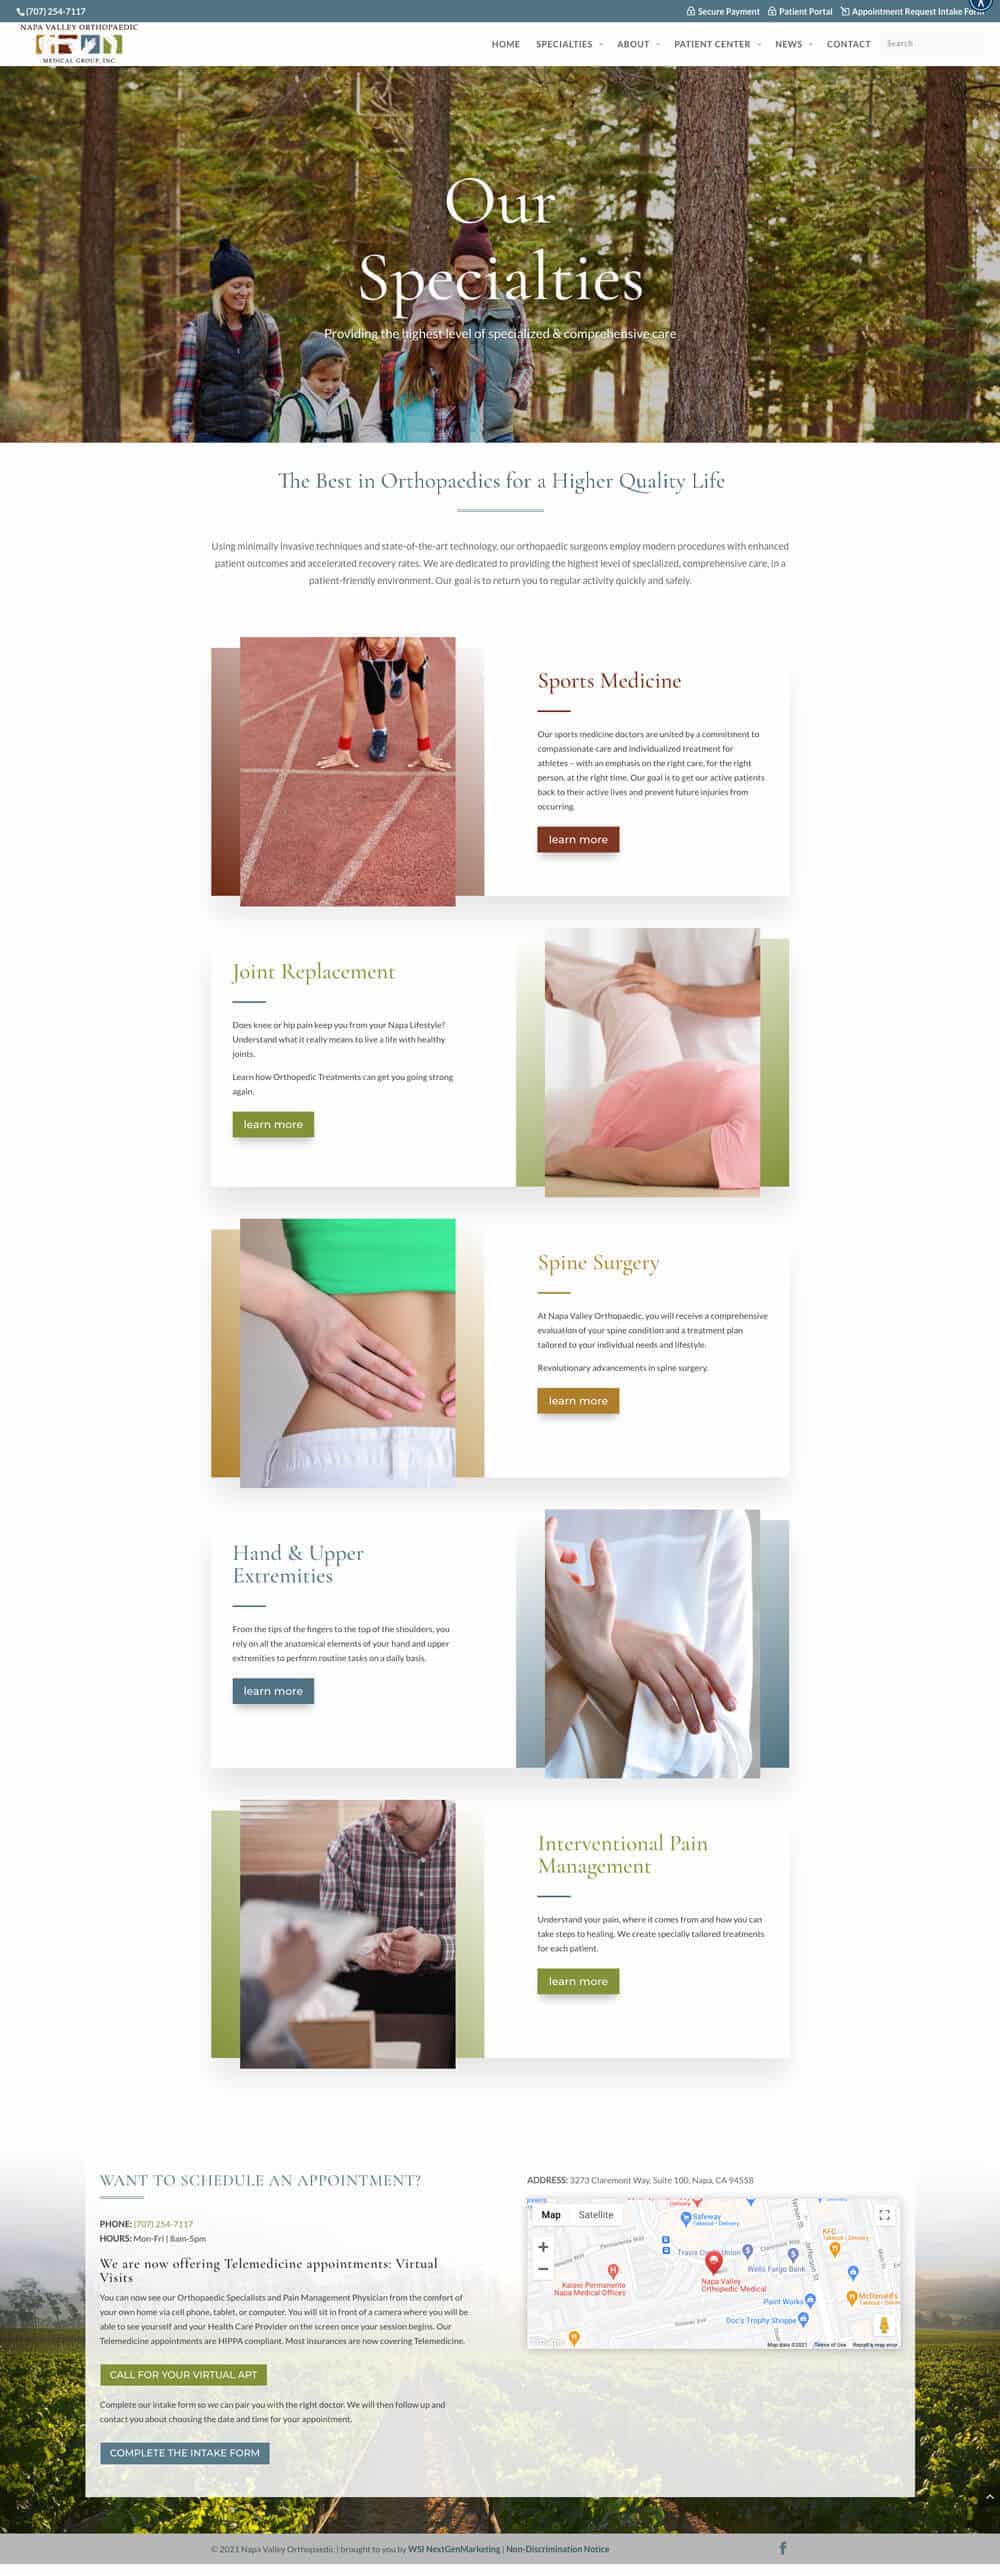 napa-valley-ortho-medical-website-design-services-1